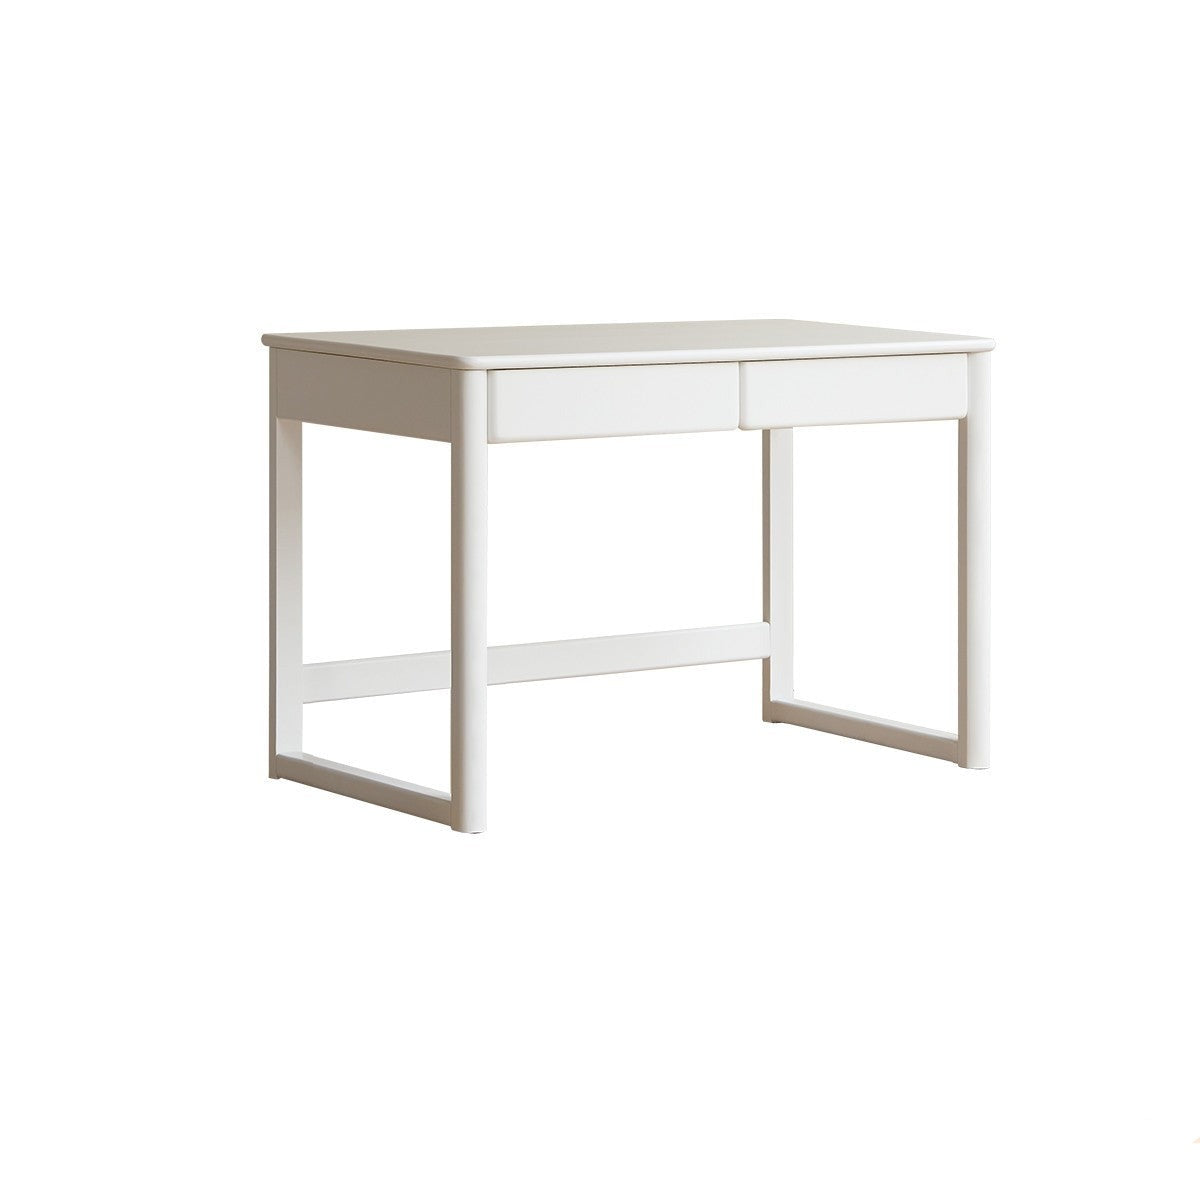 Poplar solid wood study table writing desk white cream"